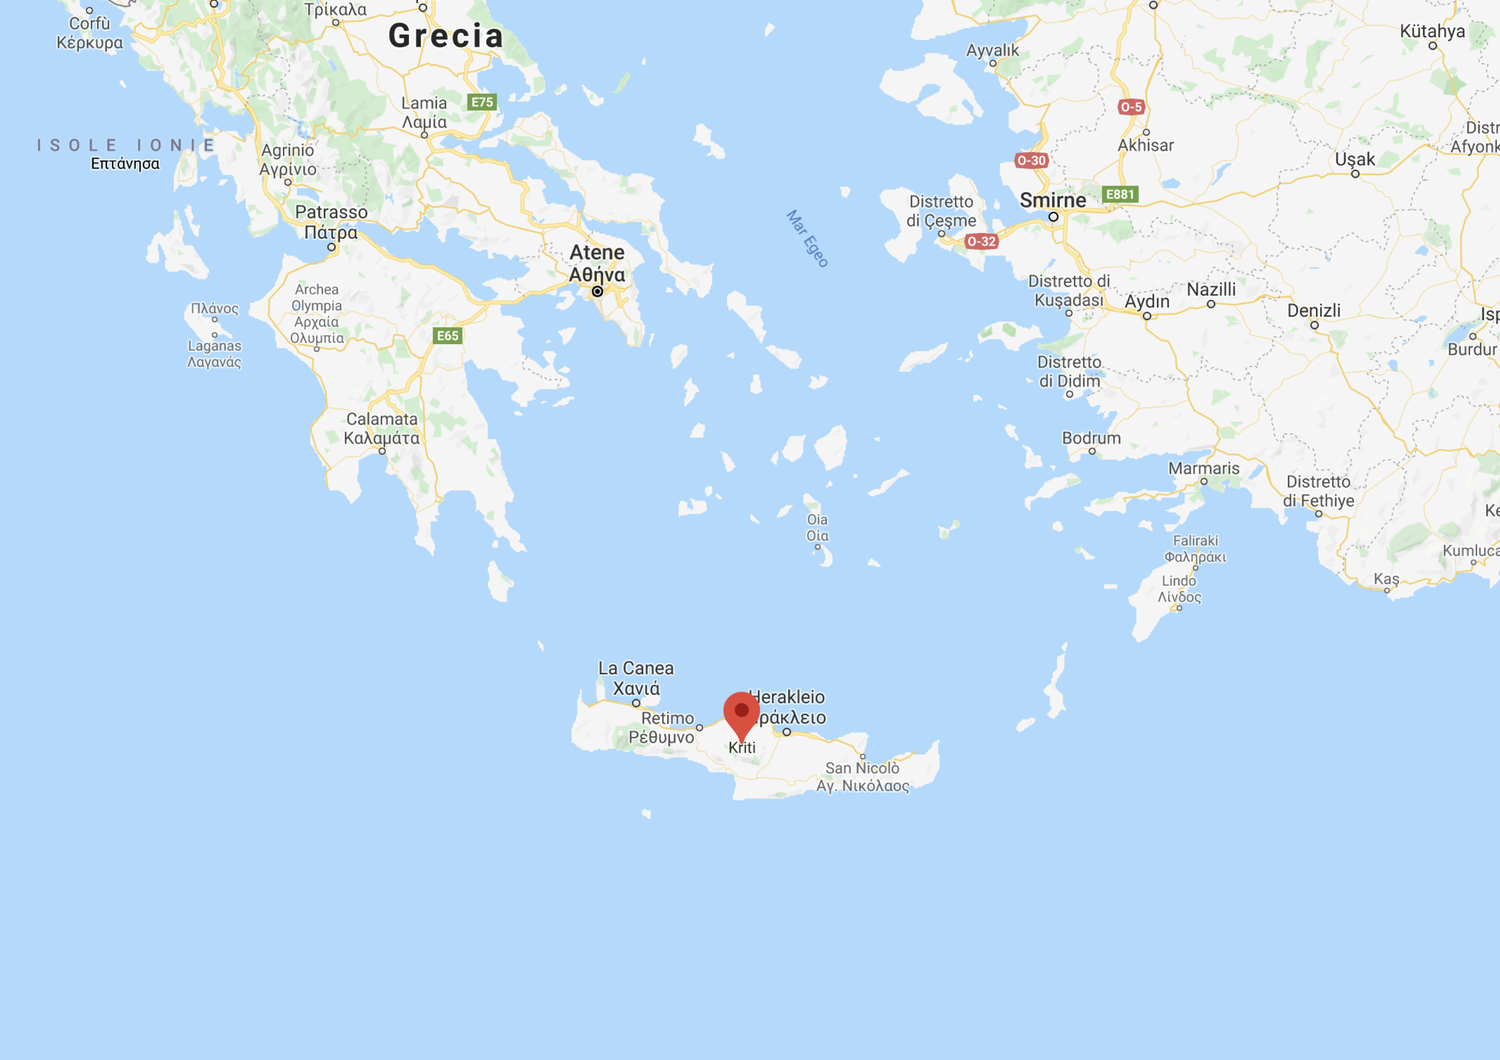 terremoto grecia creta tzunami